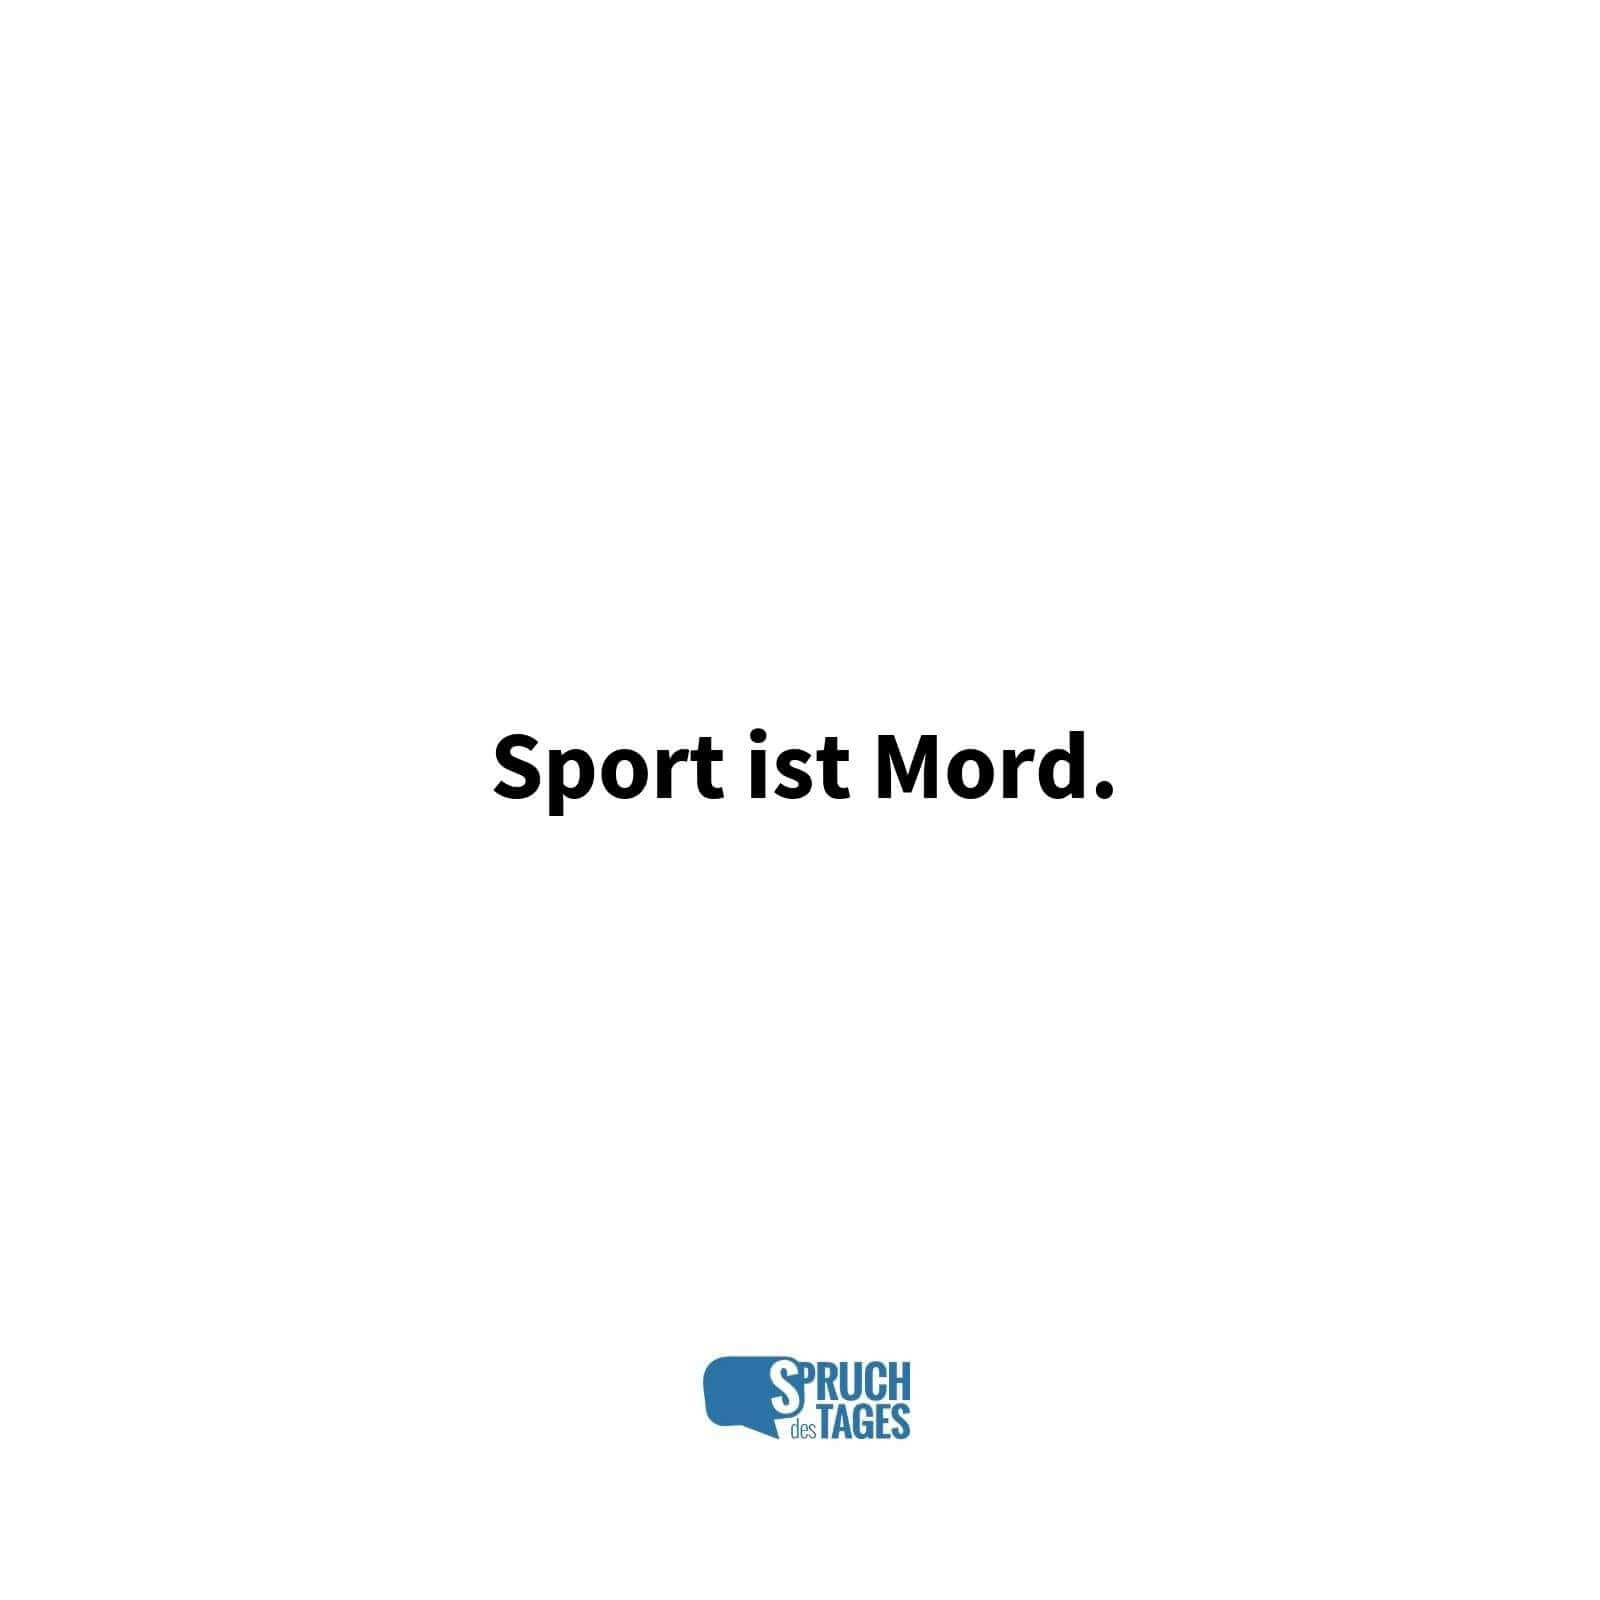 Sport ist Mord.